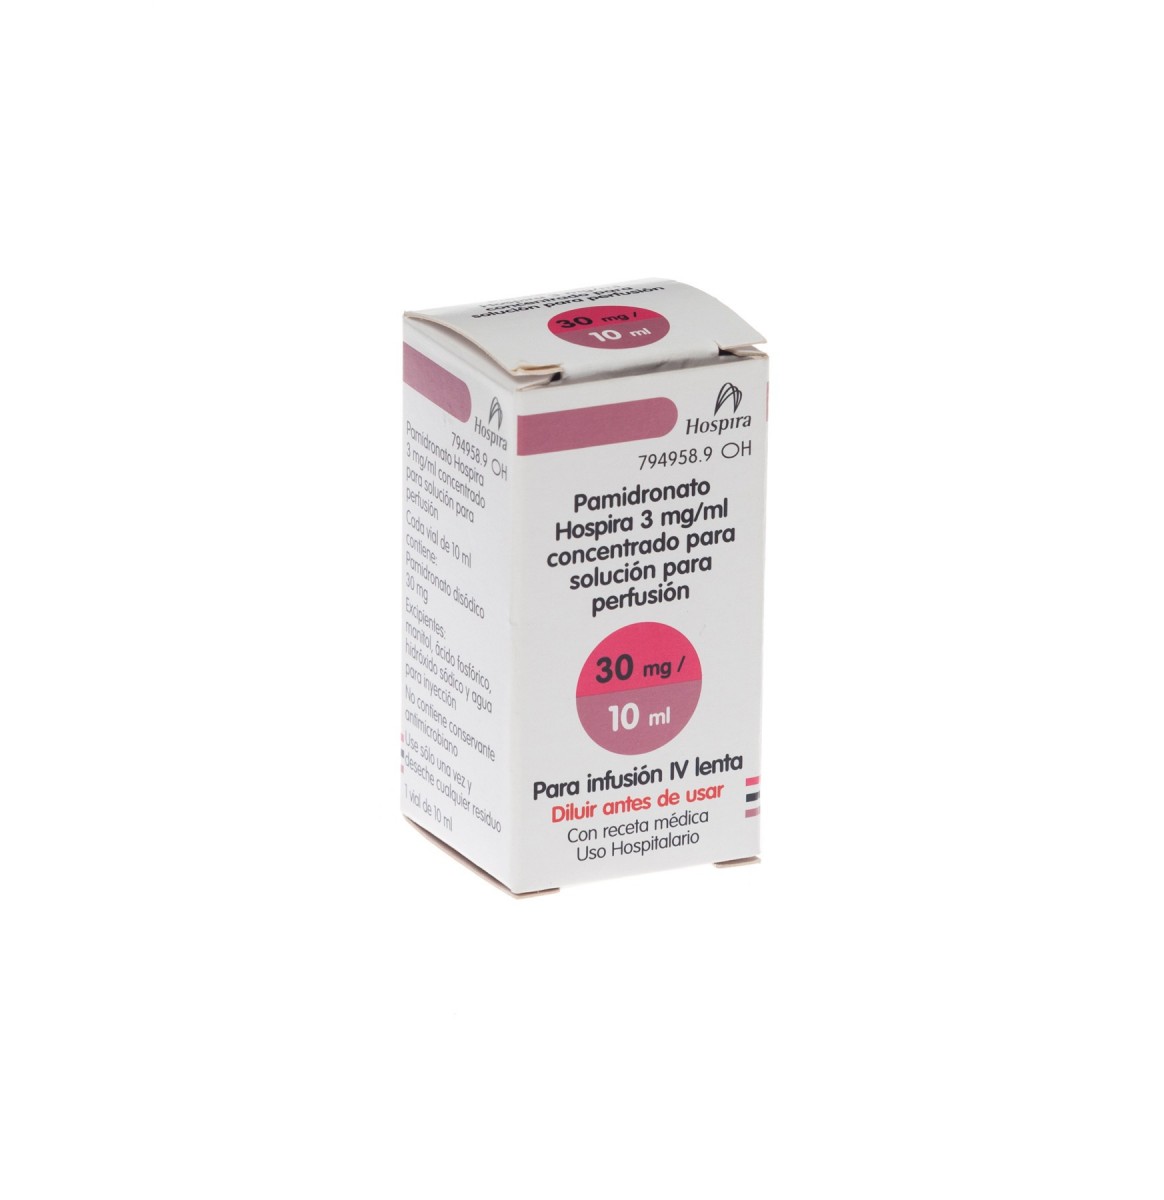 PAMIDRONATO HOSPIRA 3 mg/ml CONCENTRADO PARA SOLUCION PARA PERFUSION , 1 vial de 10 ml fotografía del envase.